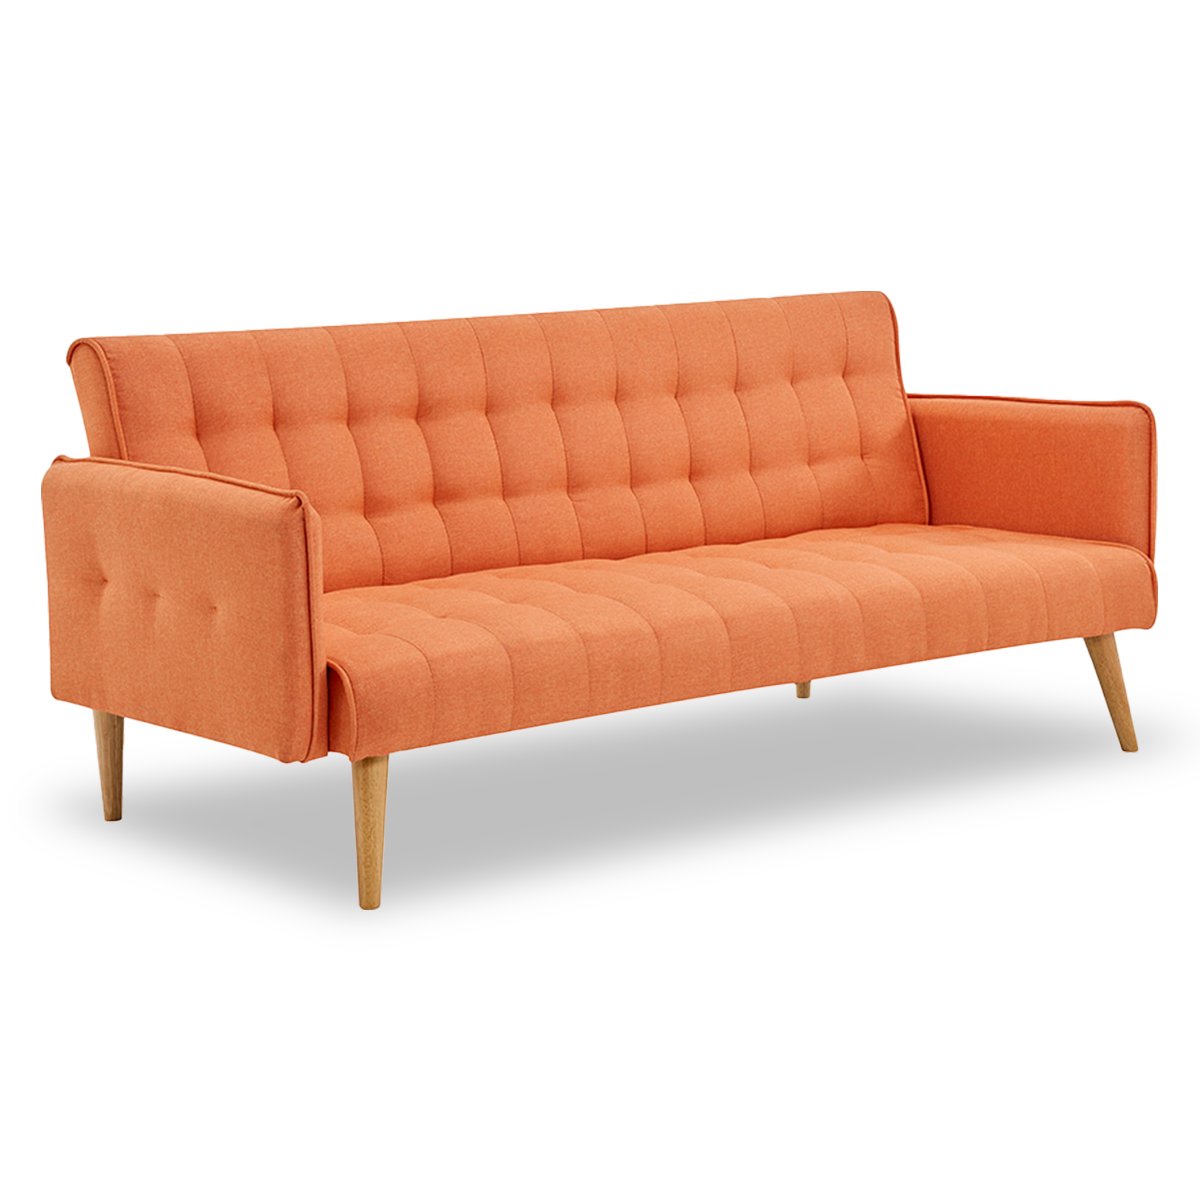 Sarantino 3 Seater Modular Linen Fabric Sofa Bed Couch Armrest Orange 1